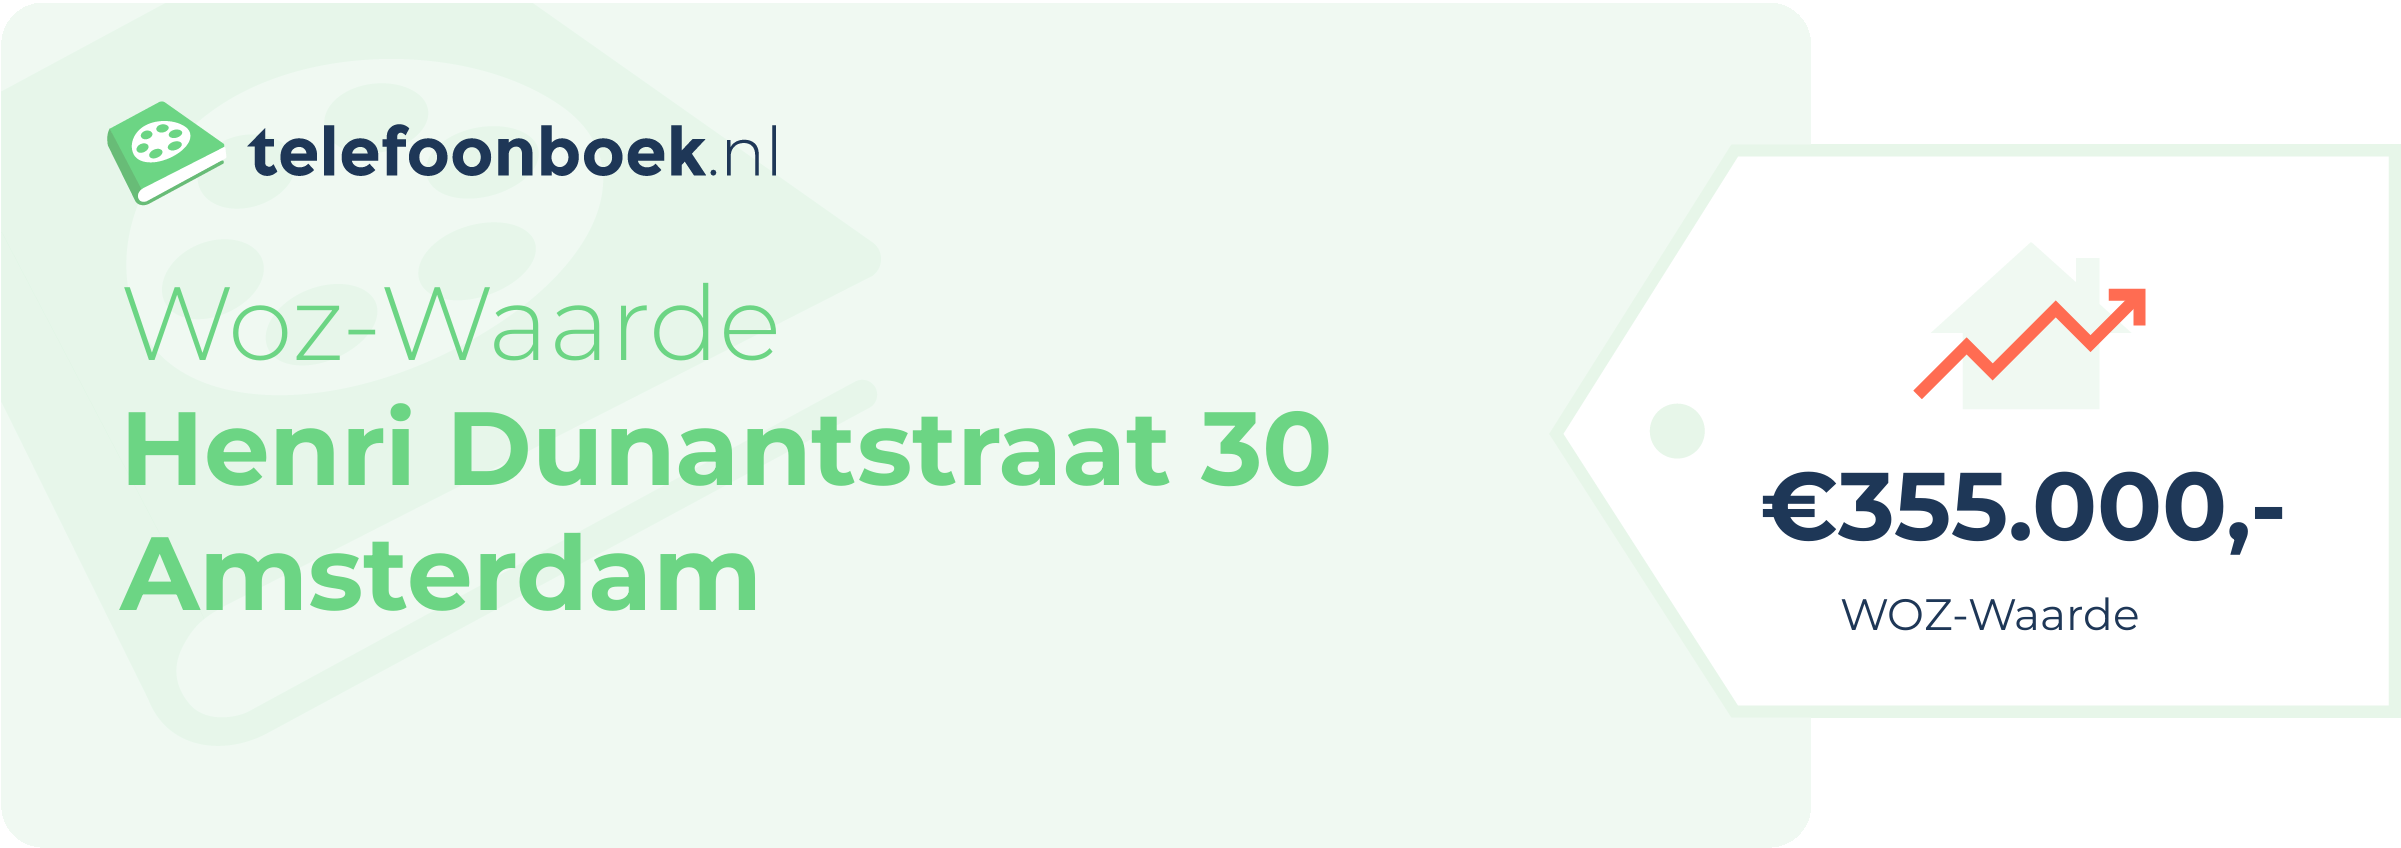 WOZ-waarde Henri Dunantstraat 30 Amsterdam